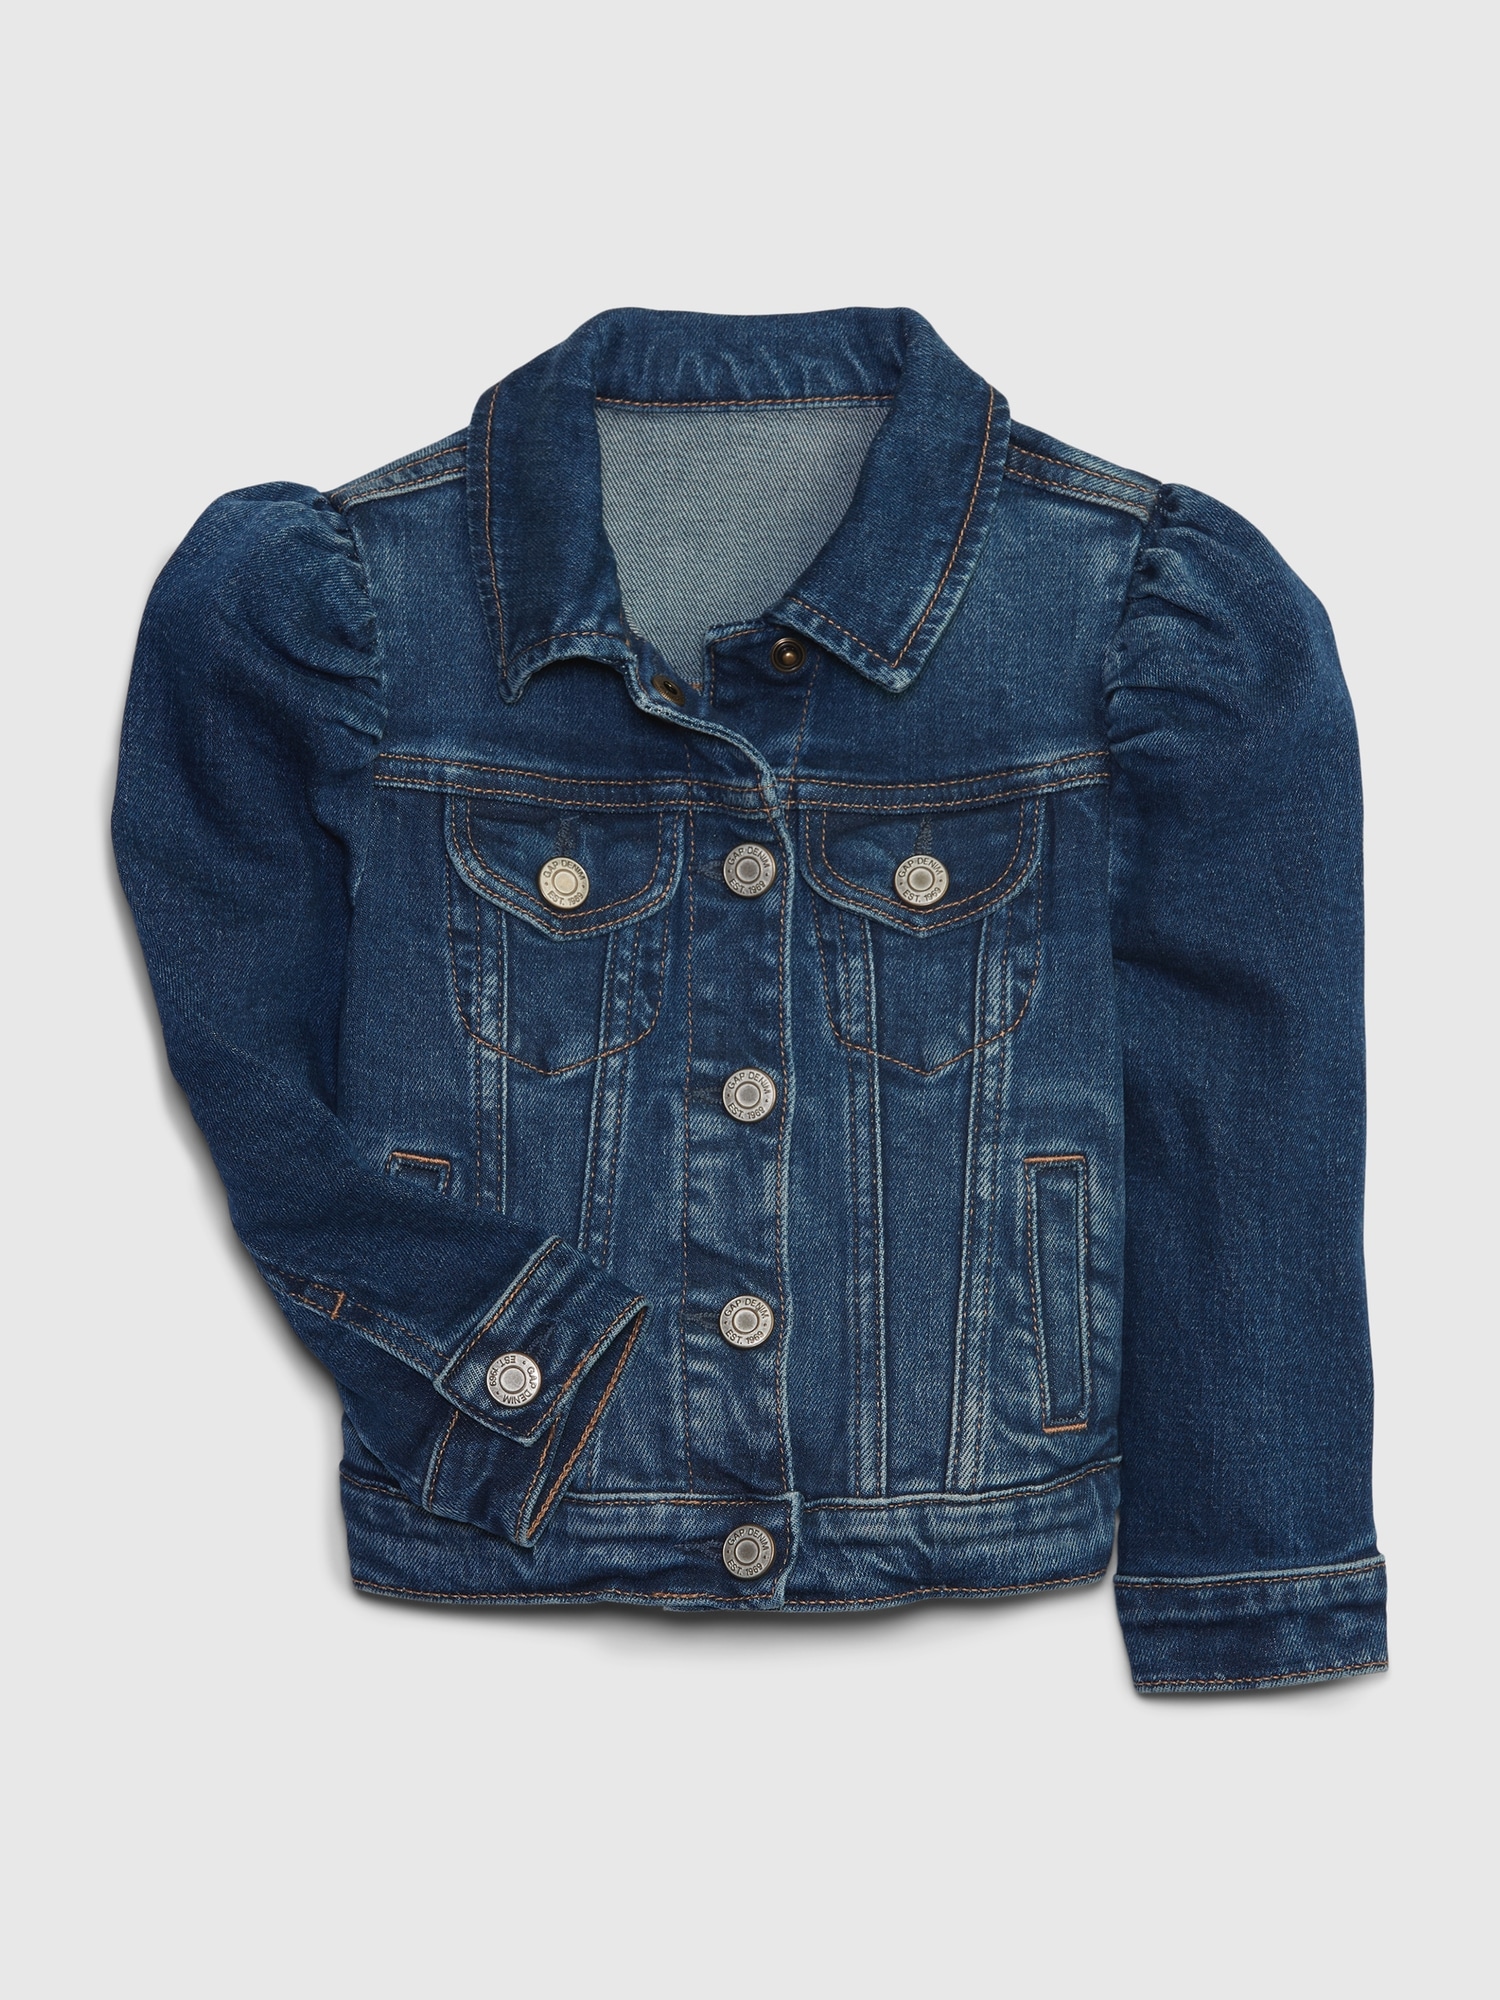 Toddler Puff Sleeve Denim Jacket | Gap